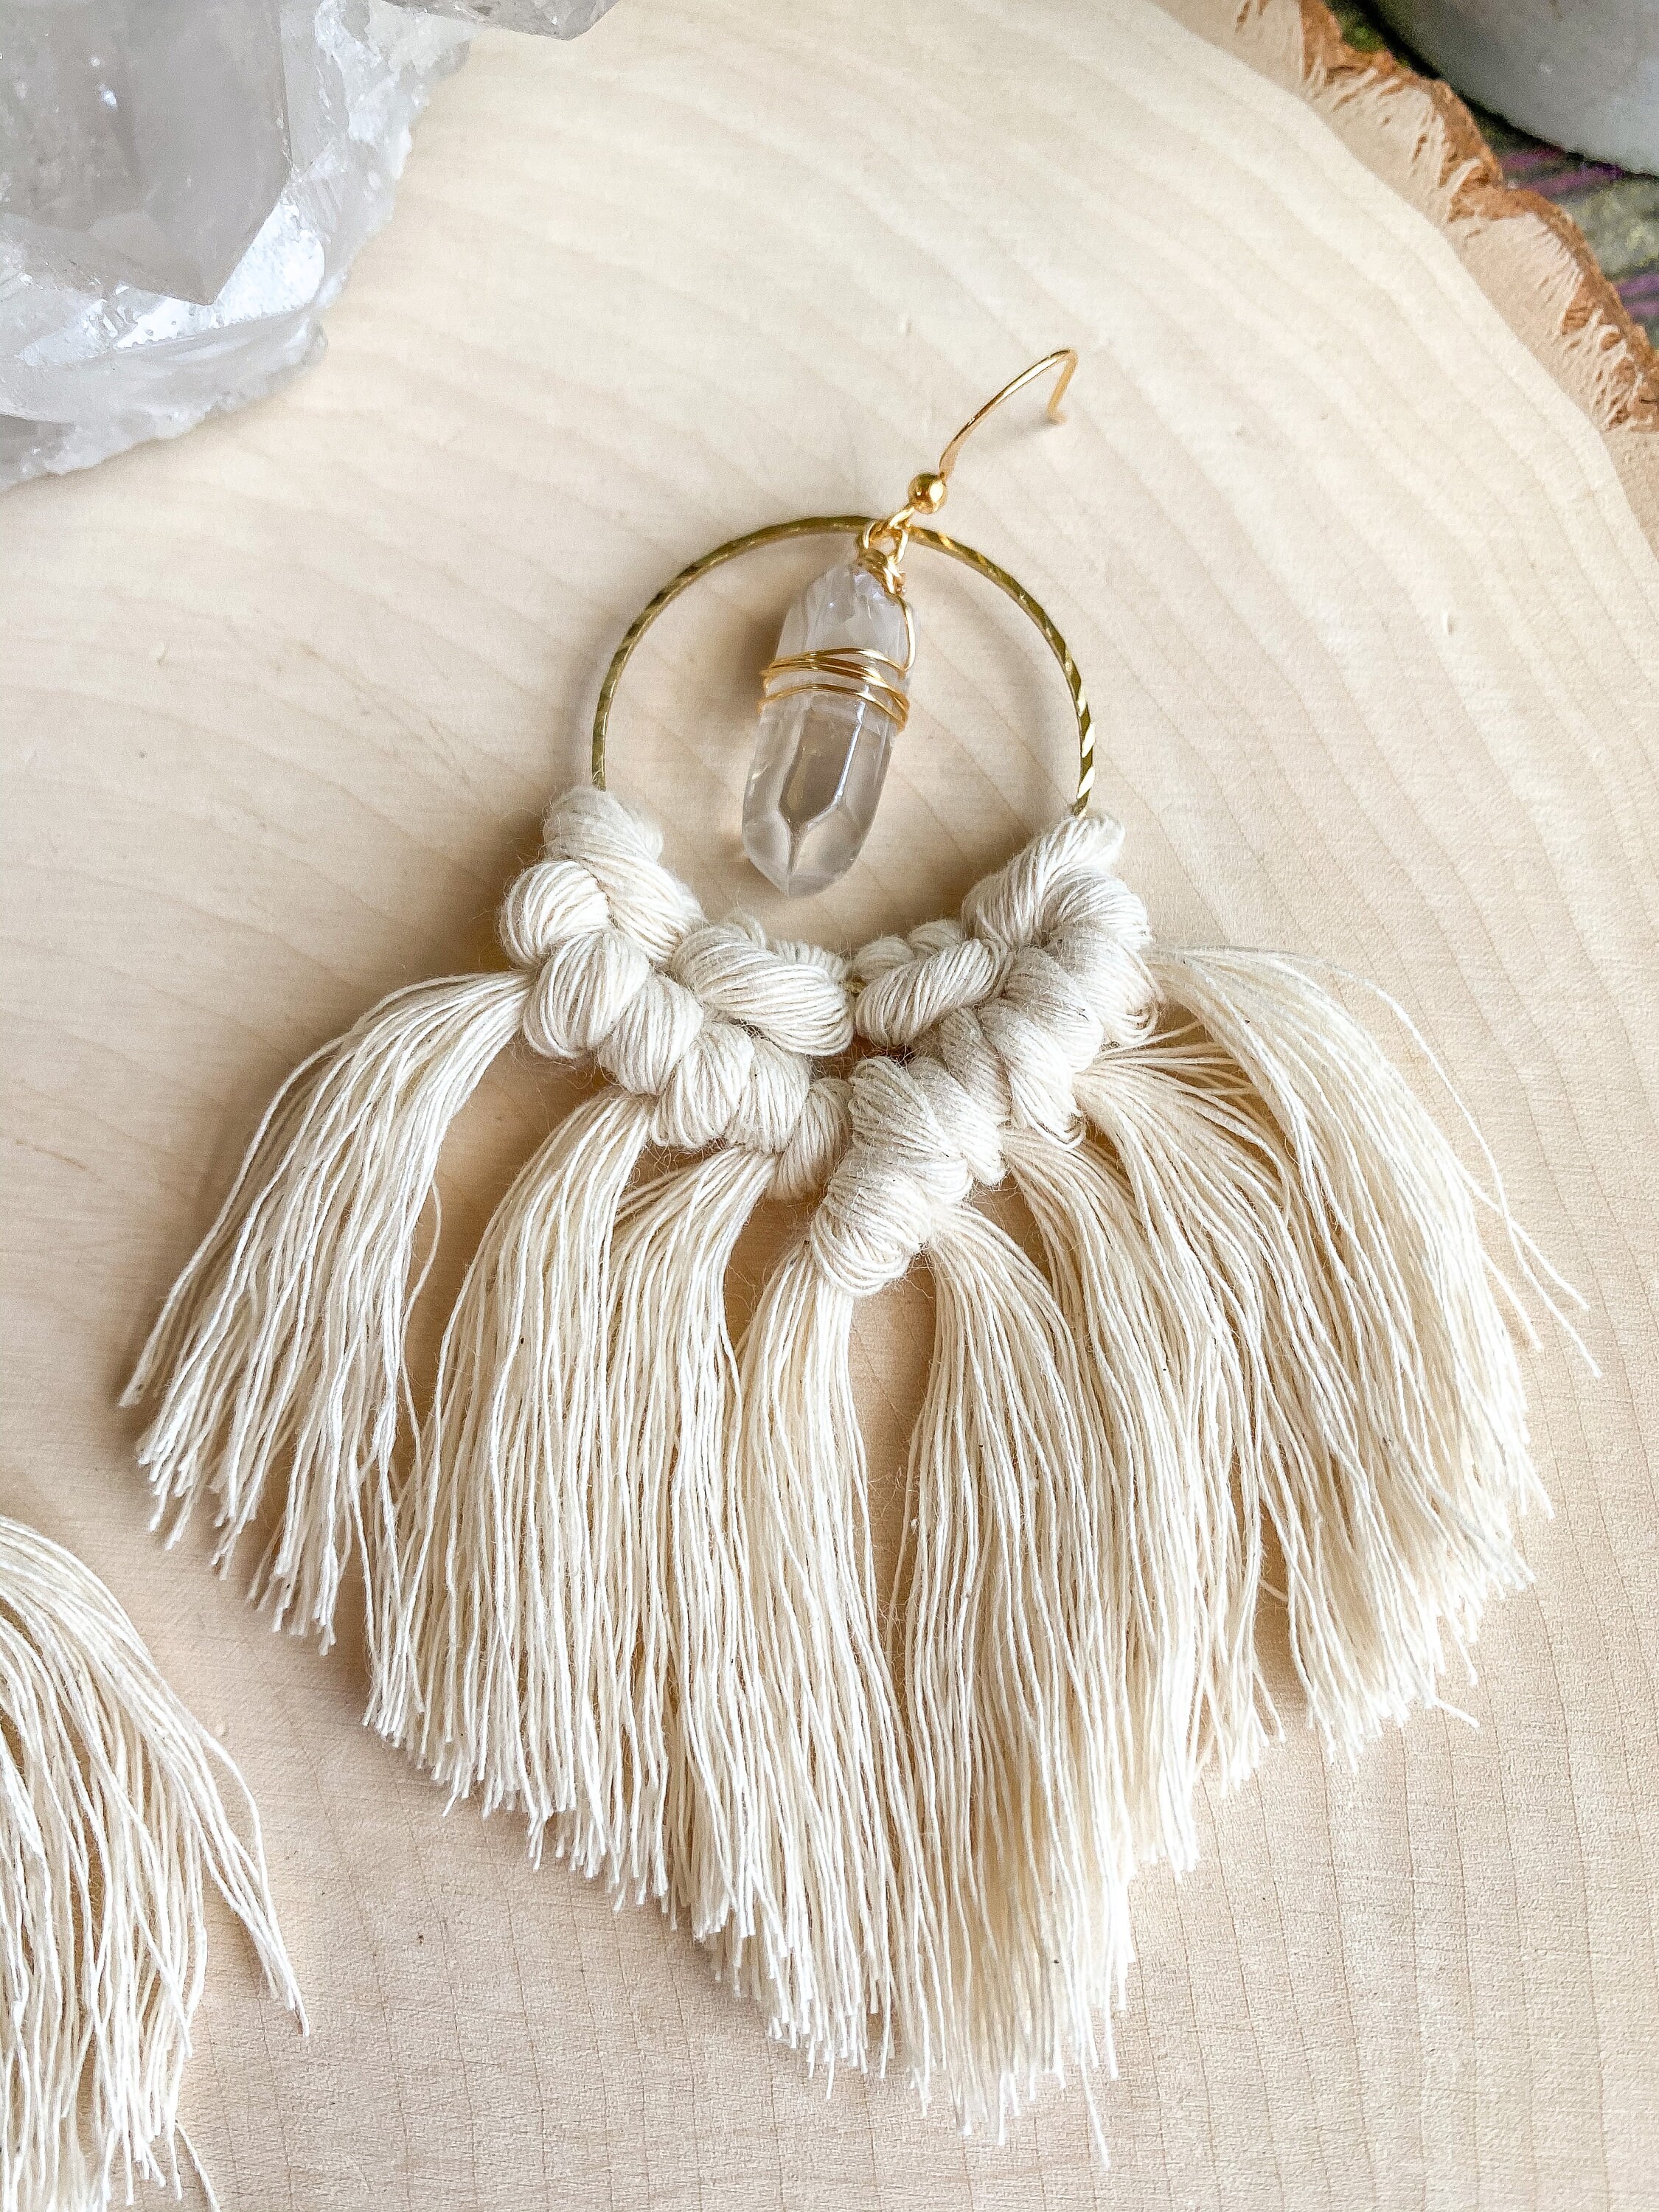 SHUANGART 30 Pcs Wood Blanks Macrame Earring Making Kit for Women Girls,  Unfinished Circle Macrame Tassel Earrings Supplies Kit with Earring Hooks  for DIY Jewelry Making : Amazon.in: Home & Kitchen